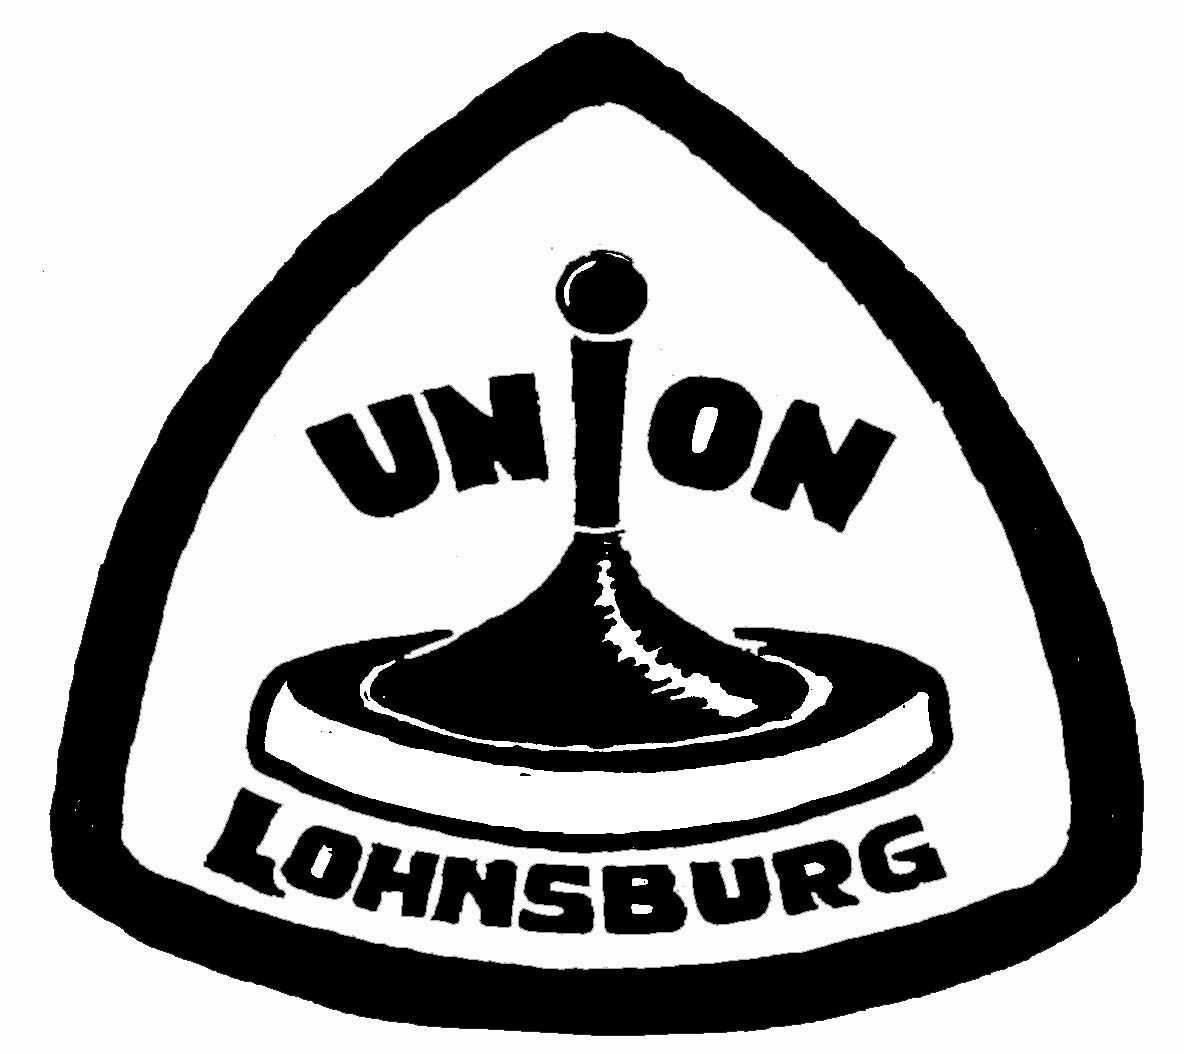 SU Stockschützen Lohnsburg a. K. 1